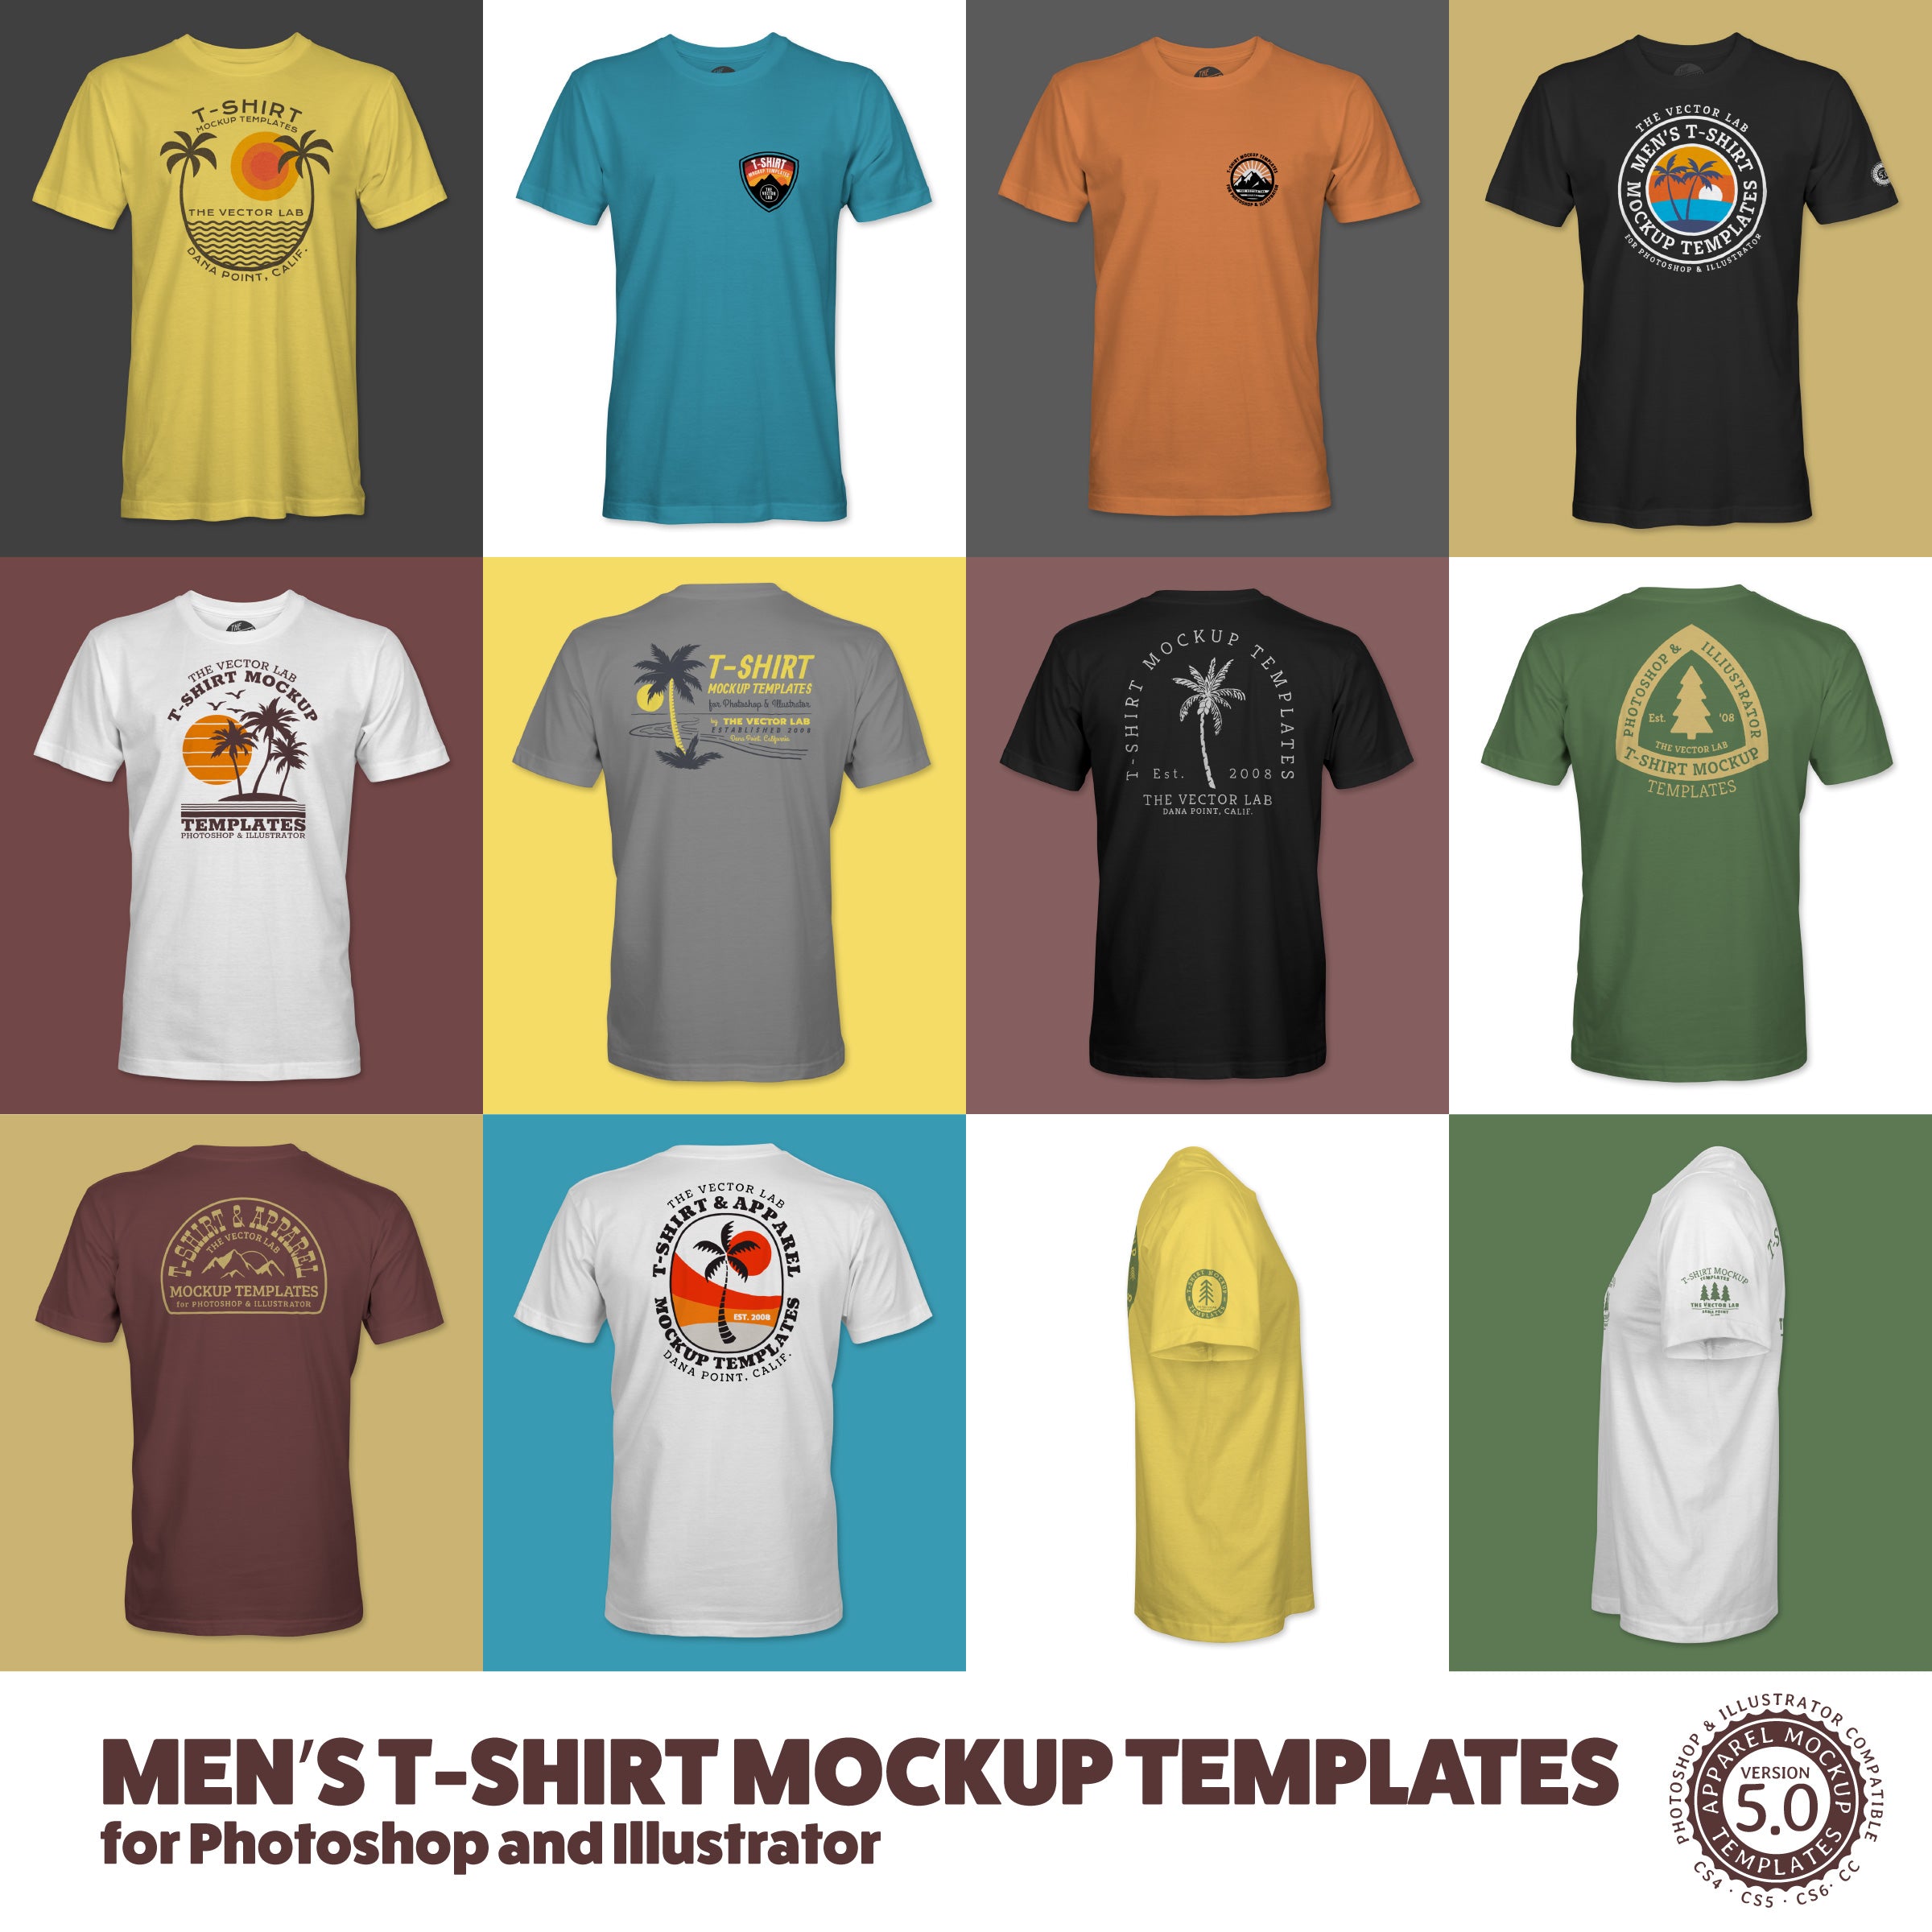 Download Men's T-Shirt Mockup Templates #01 - TheVectorLab